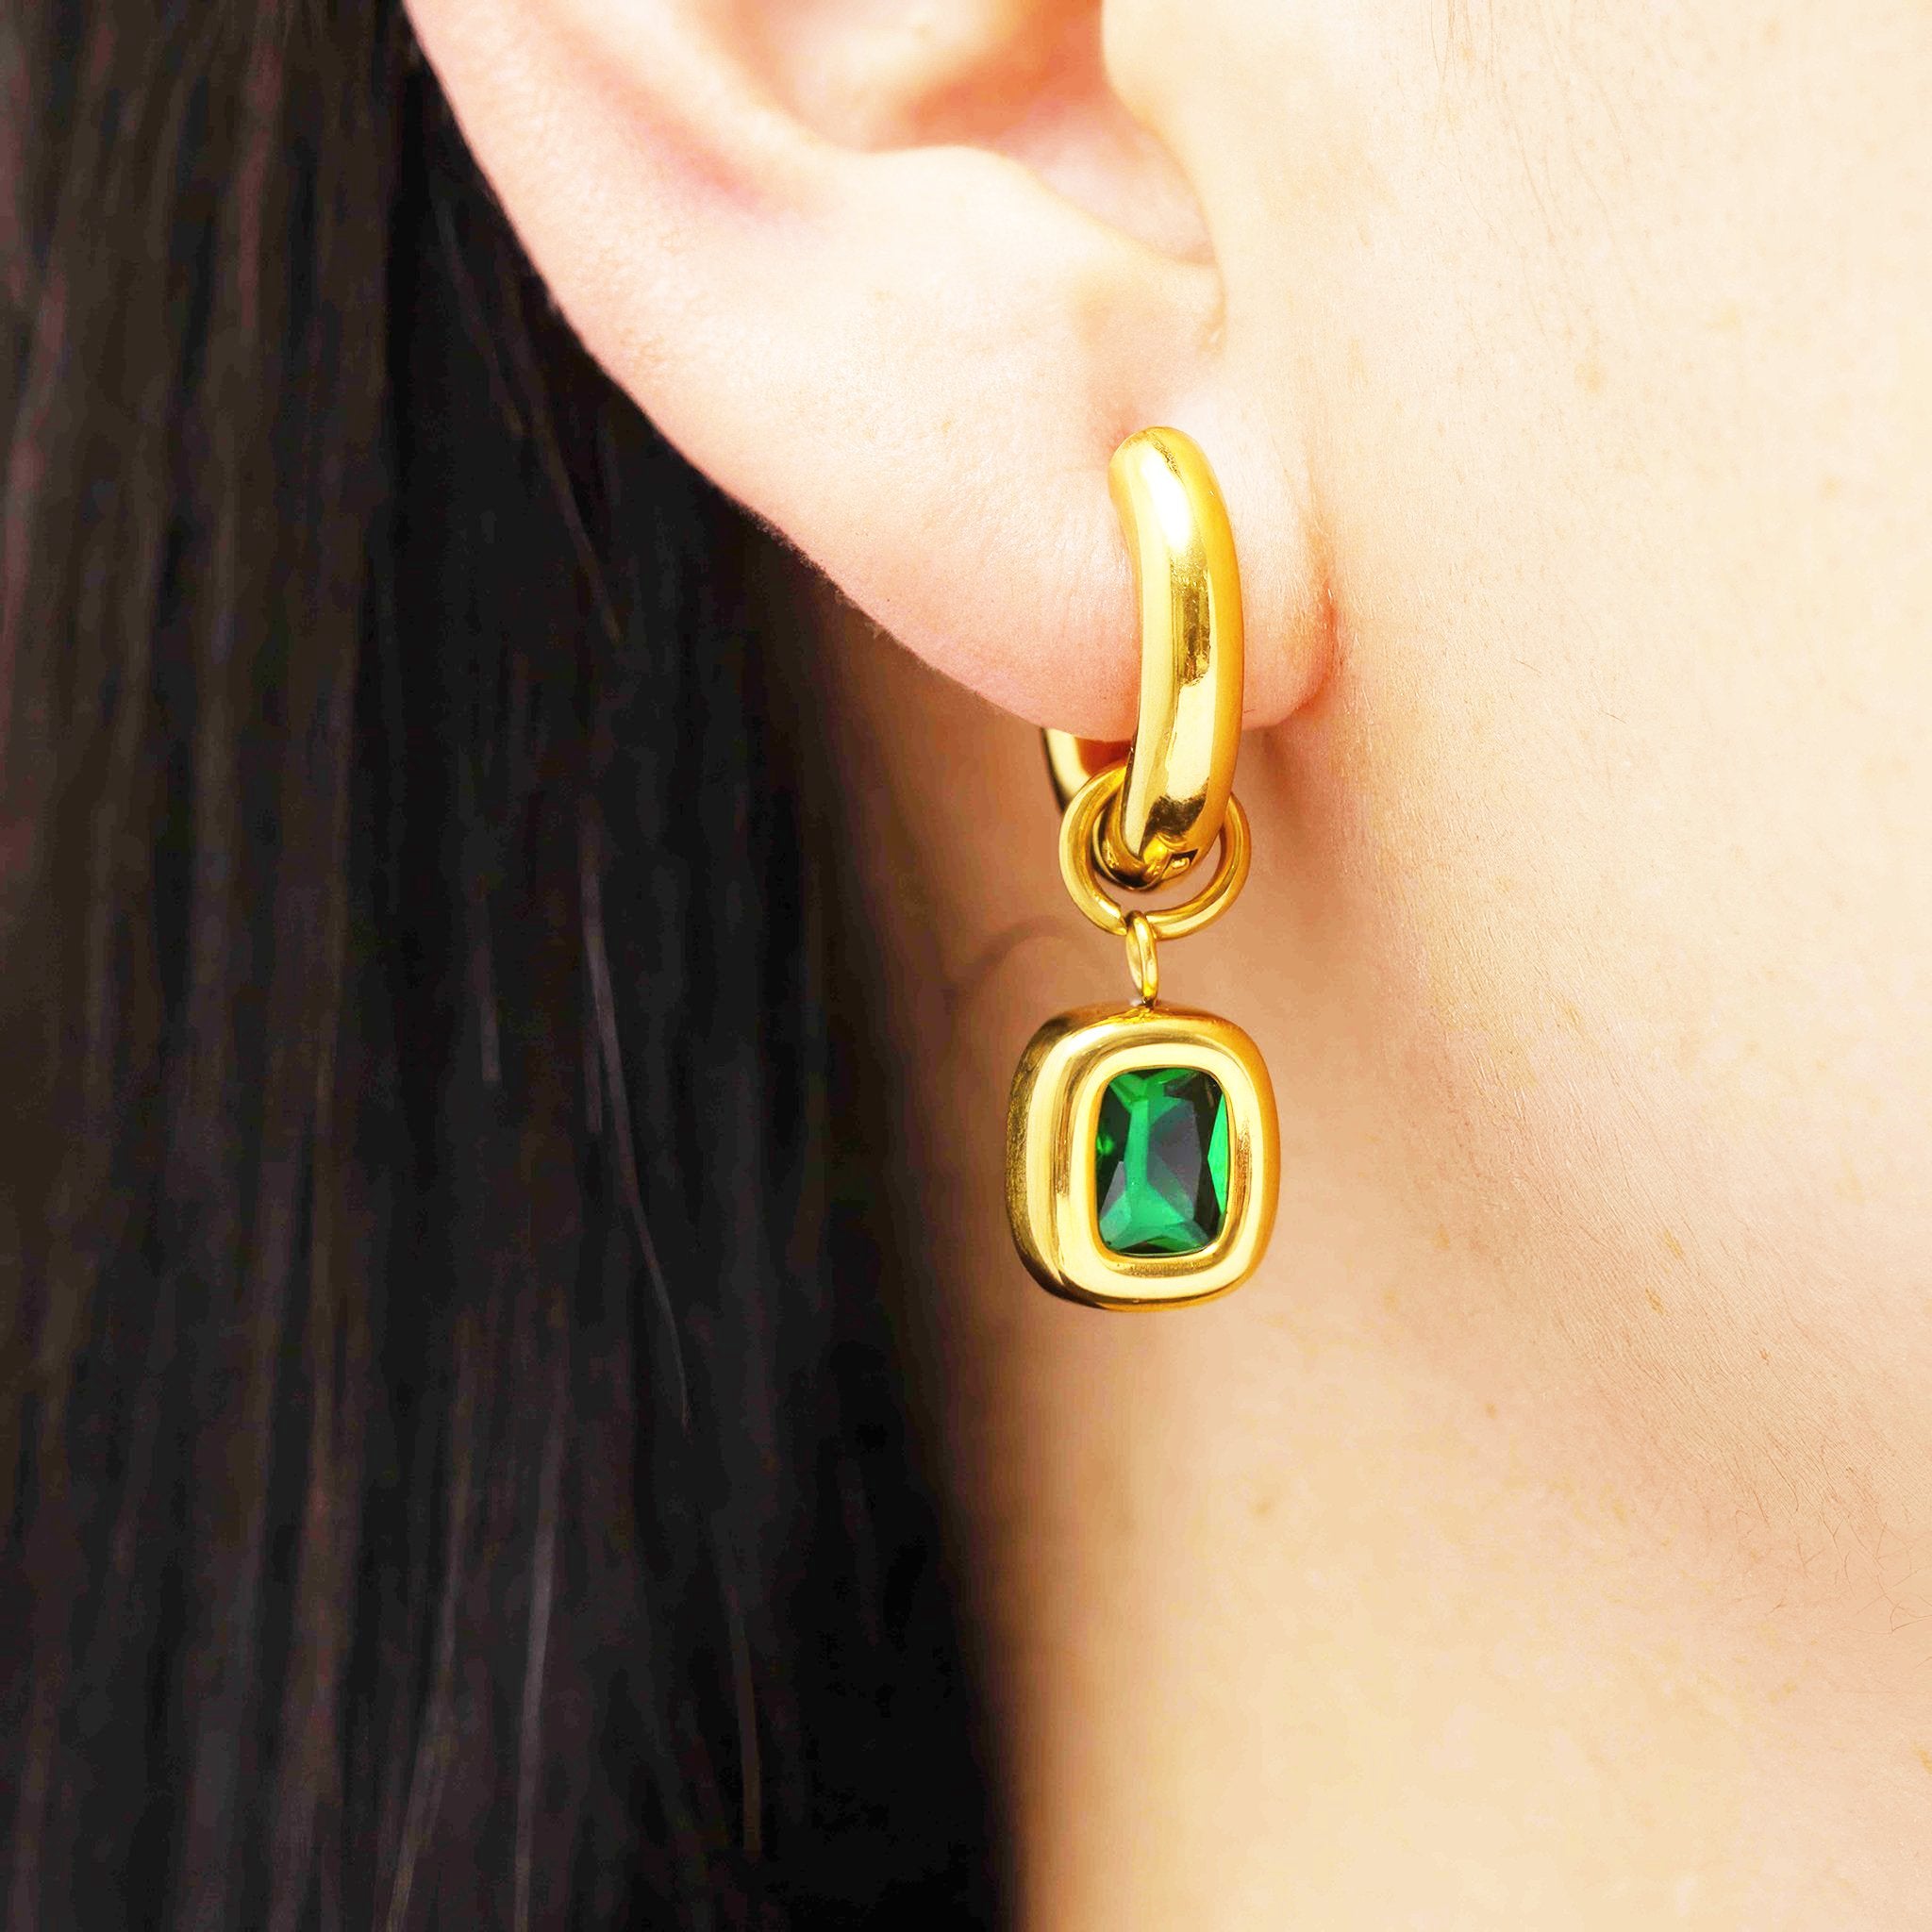 Vintage-Inspired Geometric Drop Earrings - Nobbier - Earrings - 18K Gold And Titanium PVD Coated Jewelry